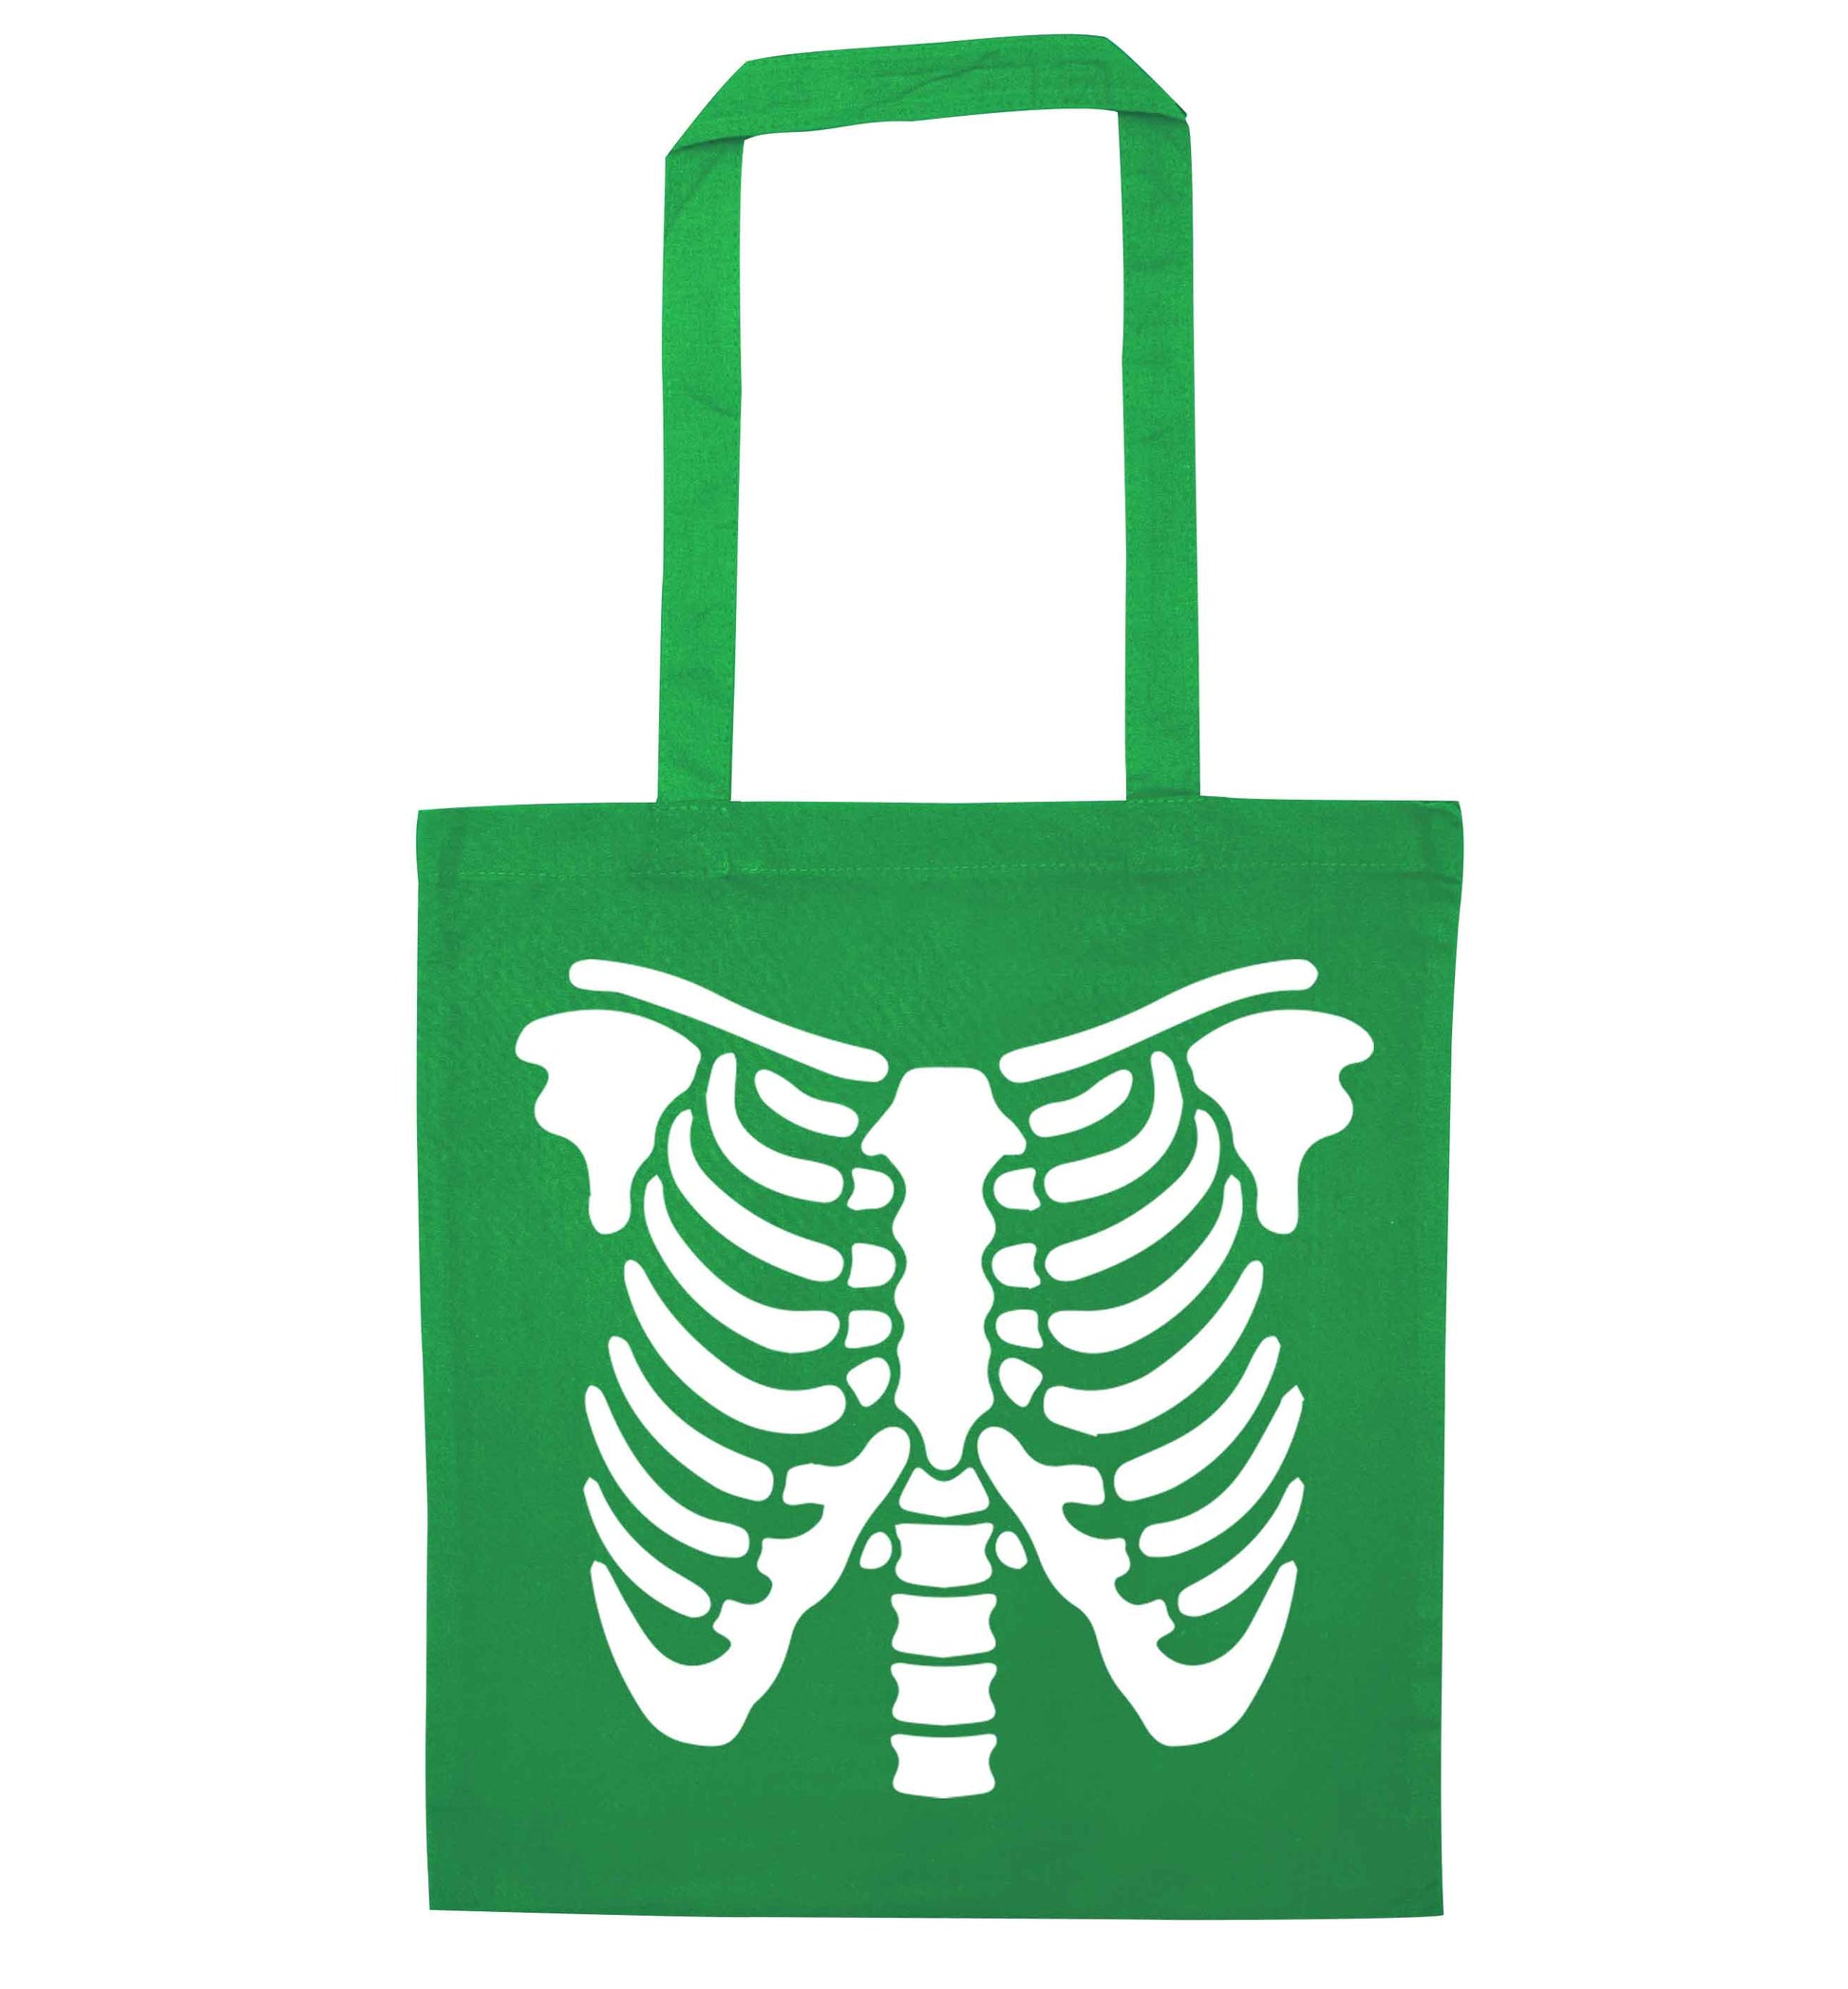 Skeleton ribcage green tote bag